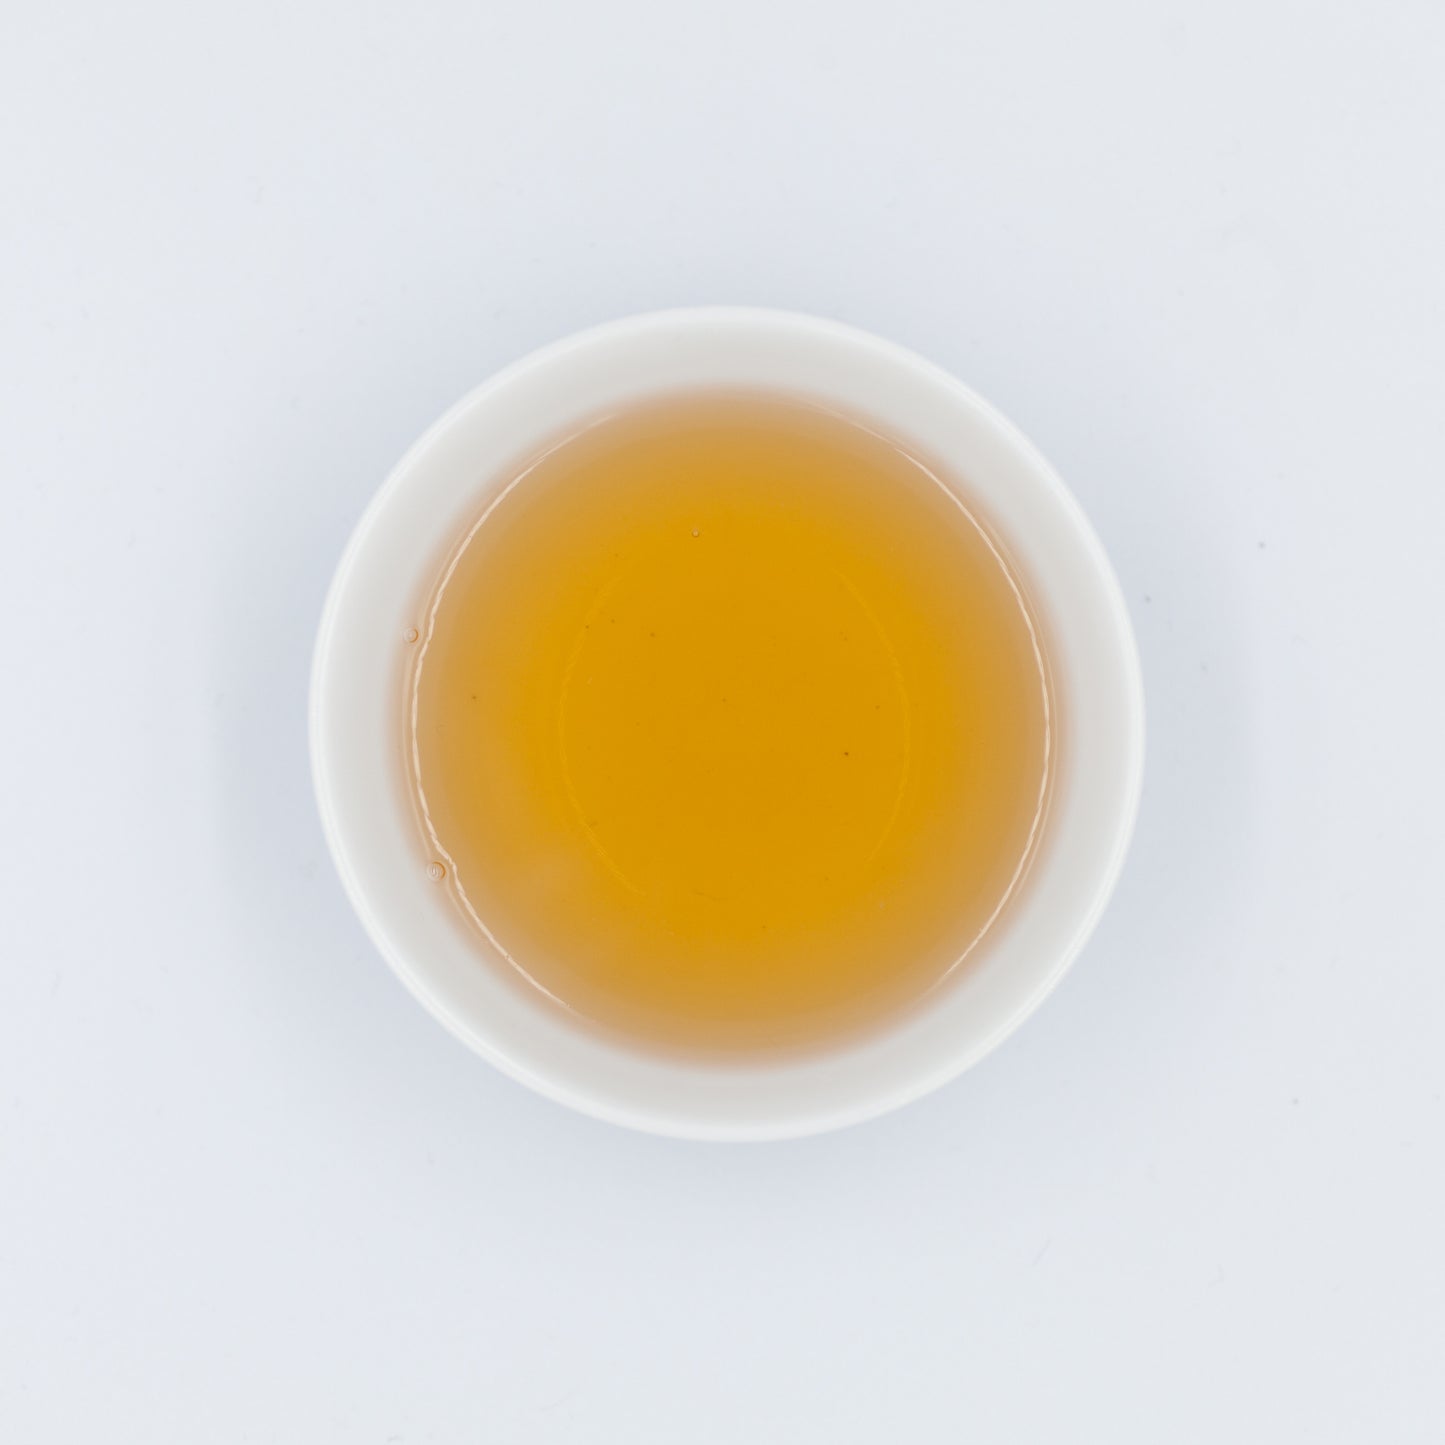 Izumi Black from BROO - Craft Tea from Japan. Single-origin, small-batch, pesticide-free tea grown in Ashikita, Kumamoto. いずみ紅茶